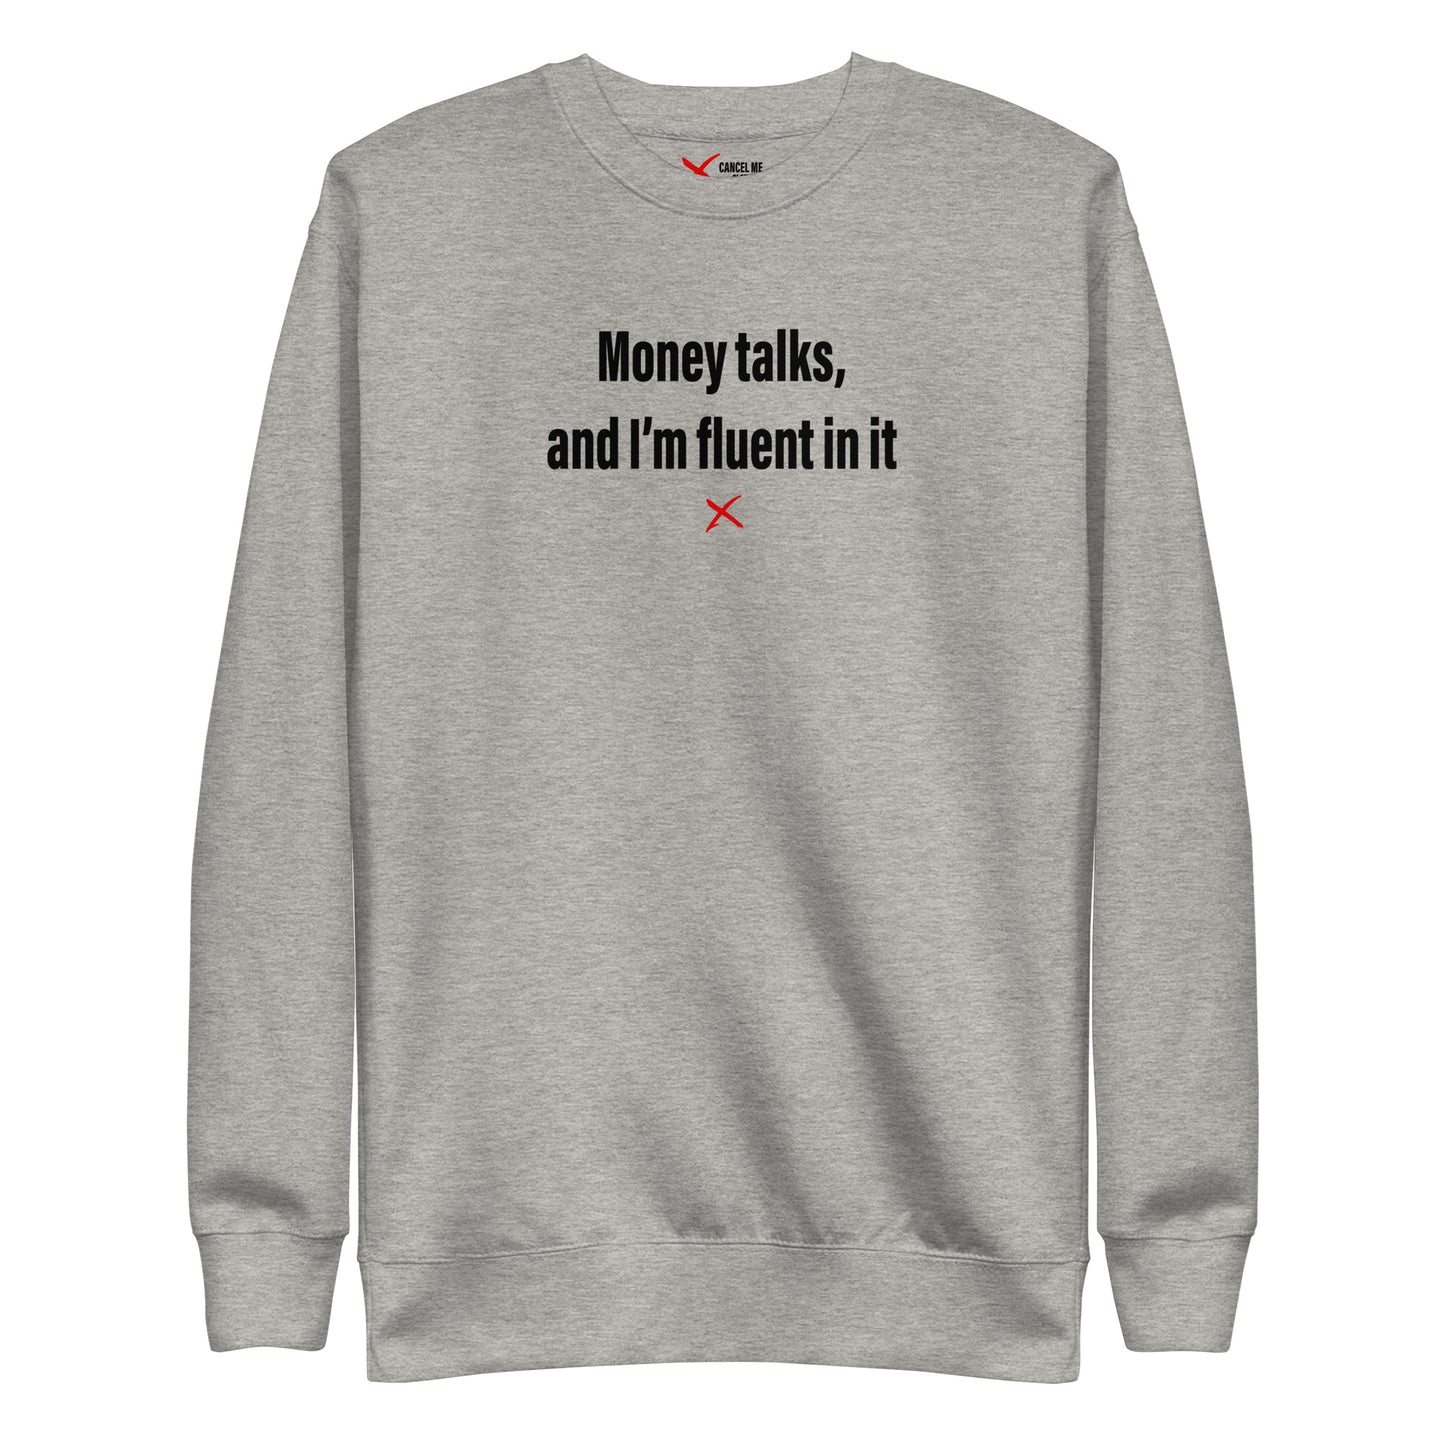 Money talks, and I'm fluent in it - Sweatshirt